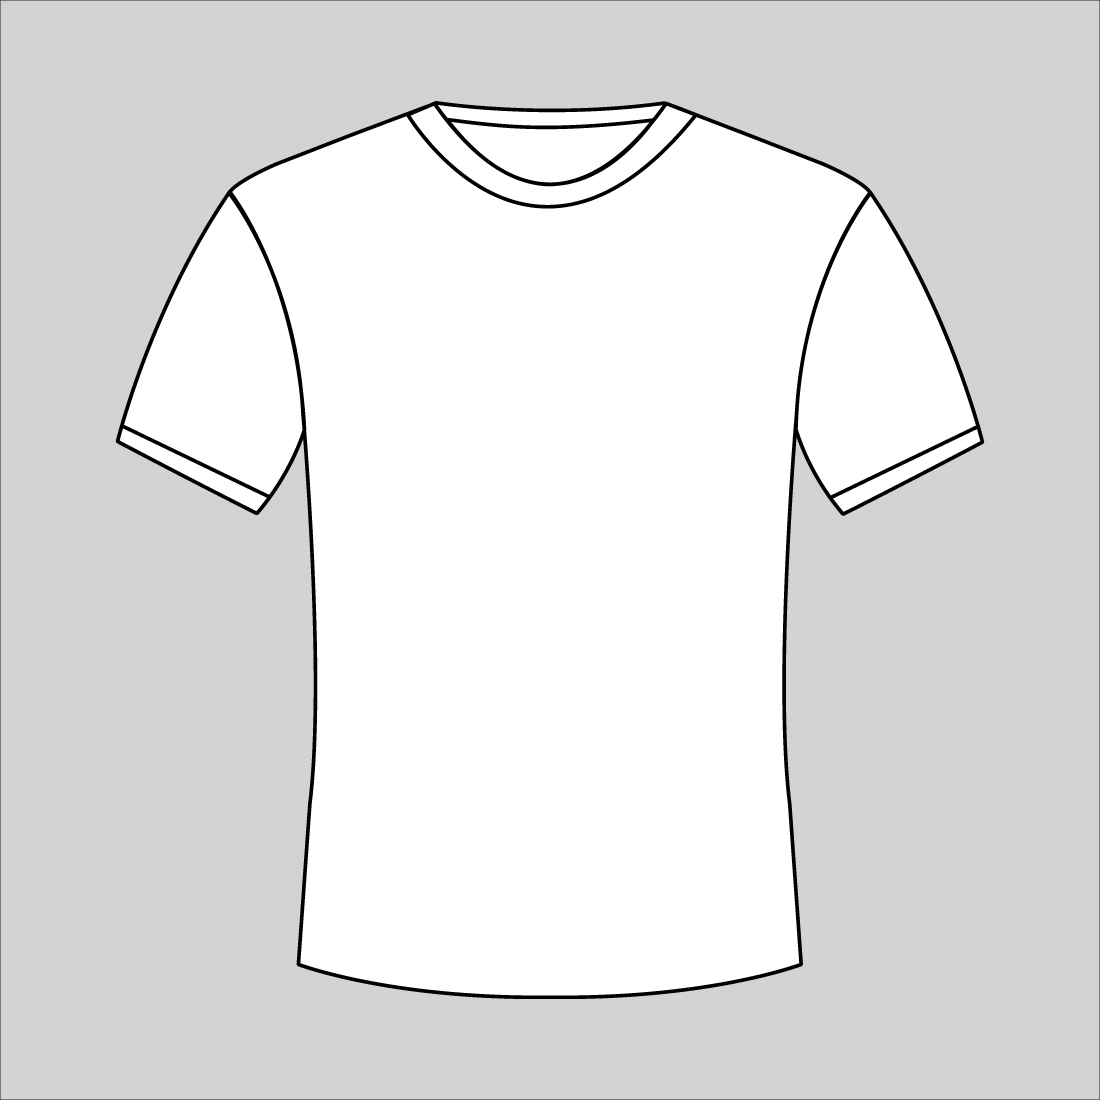 T Shirt Outline Template | museosdelima.com